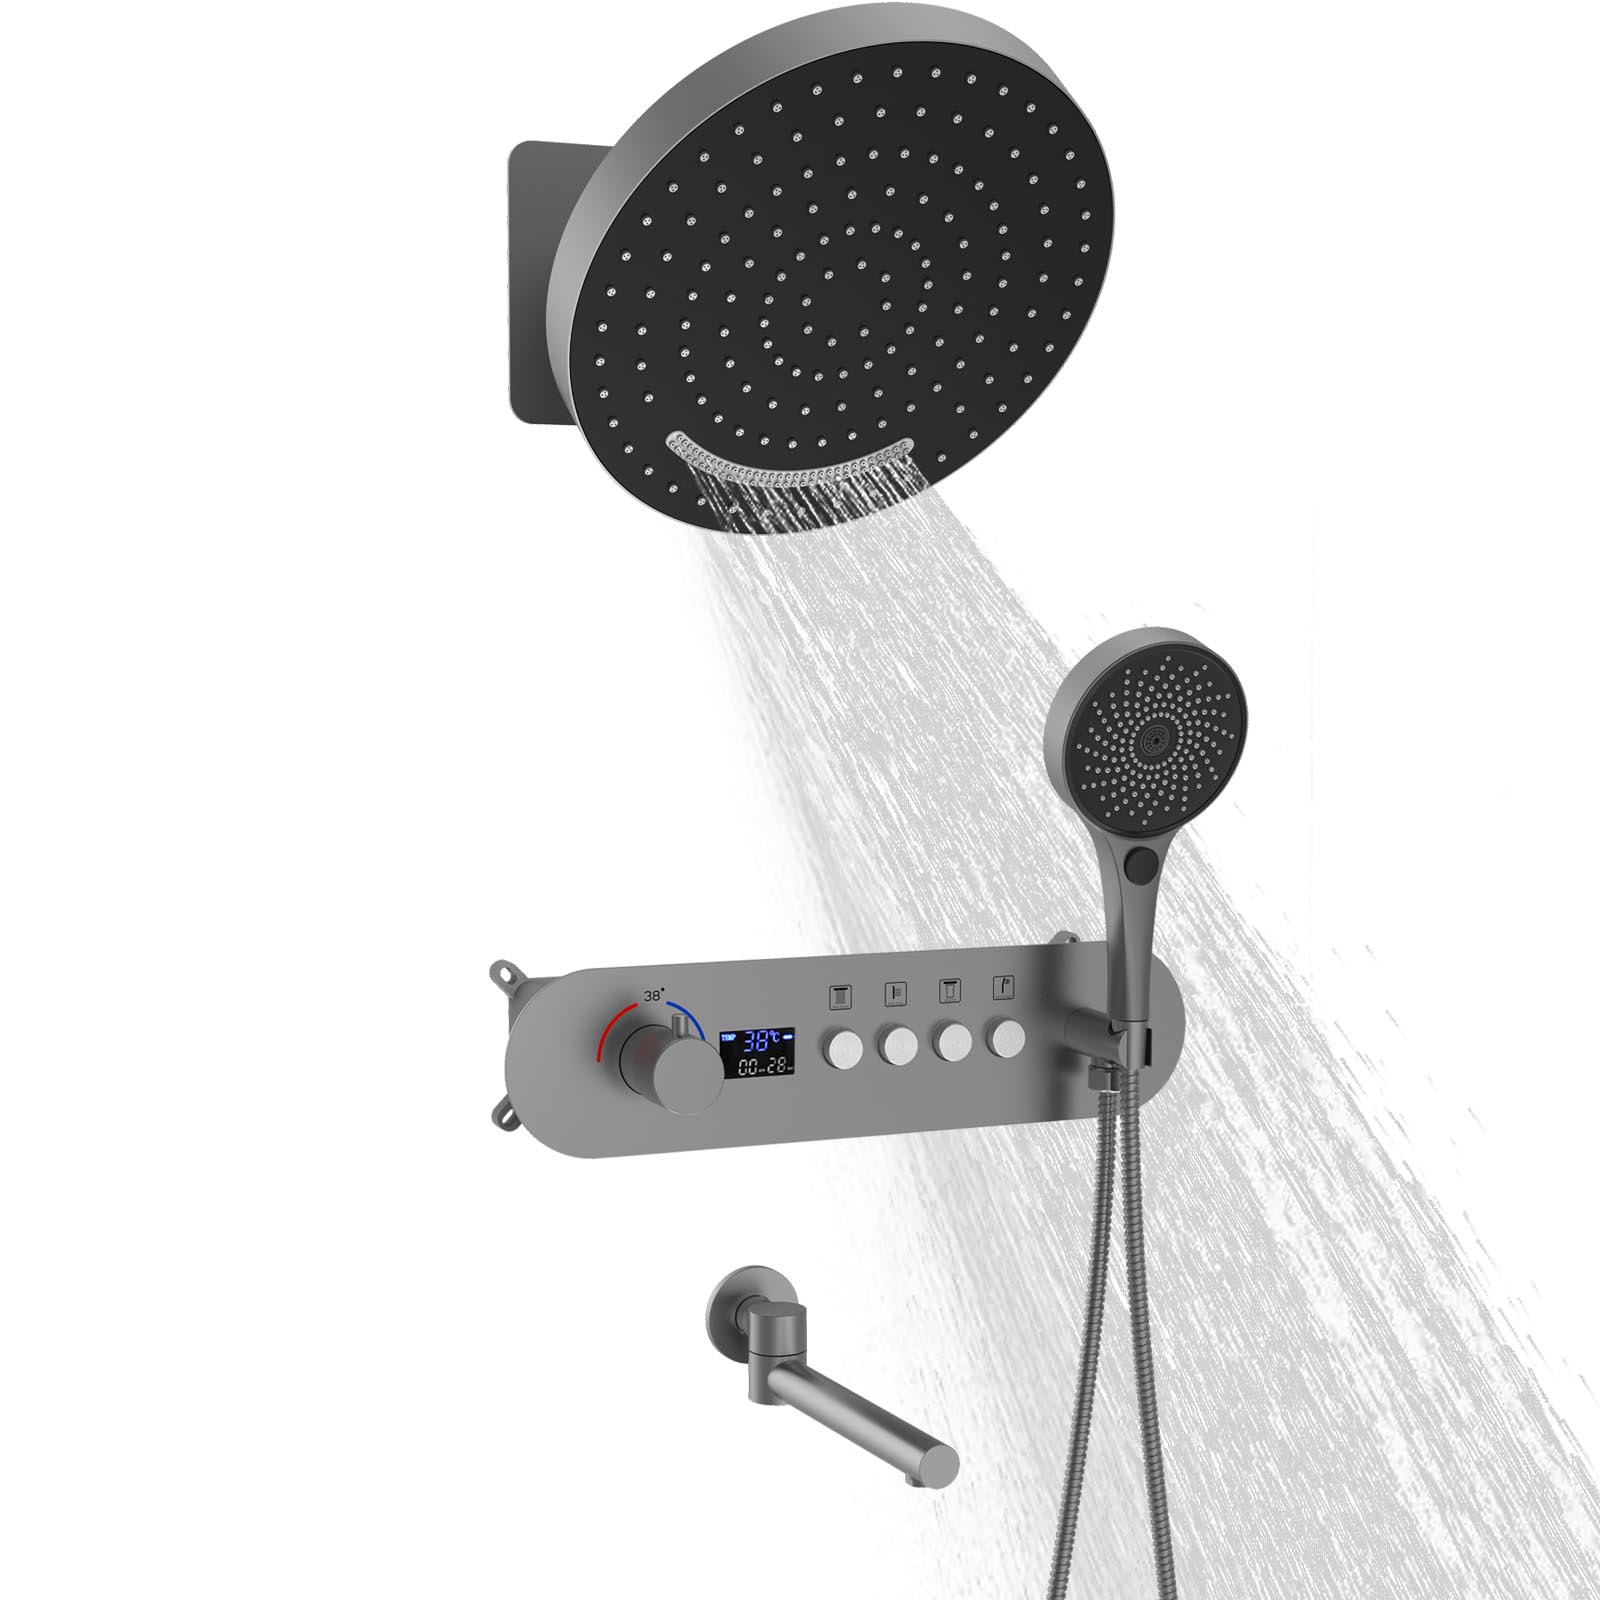 Painel de chuveiro de parede para banheiro, sistema de chuveiro de bronze, número mostrado, kit de chuveiro de 4 funções